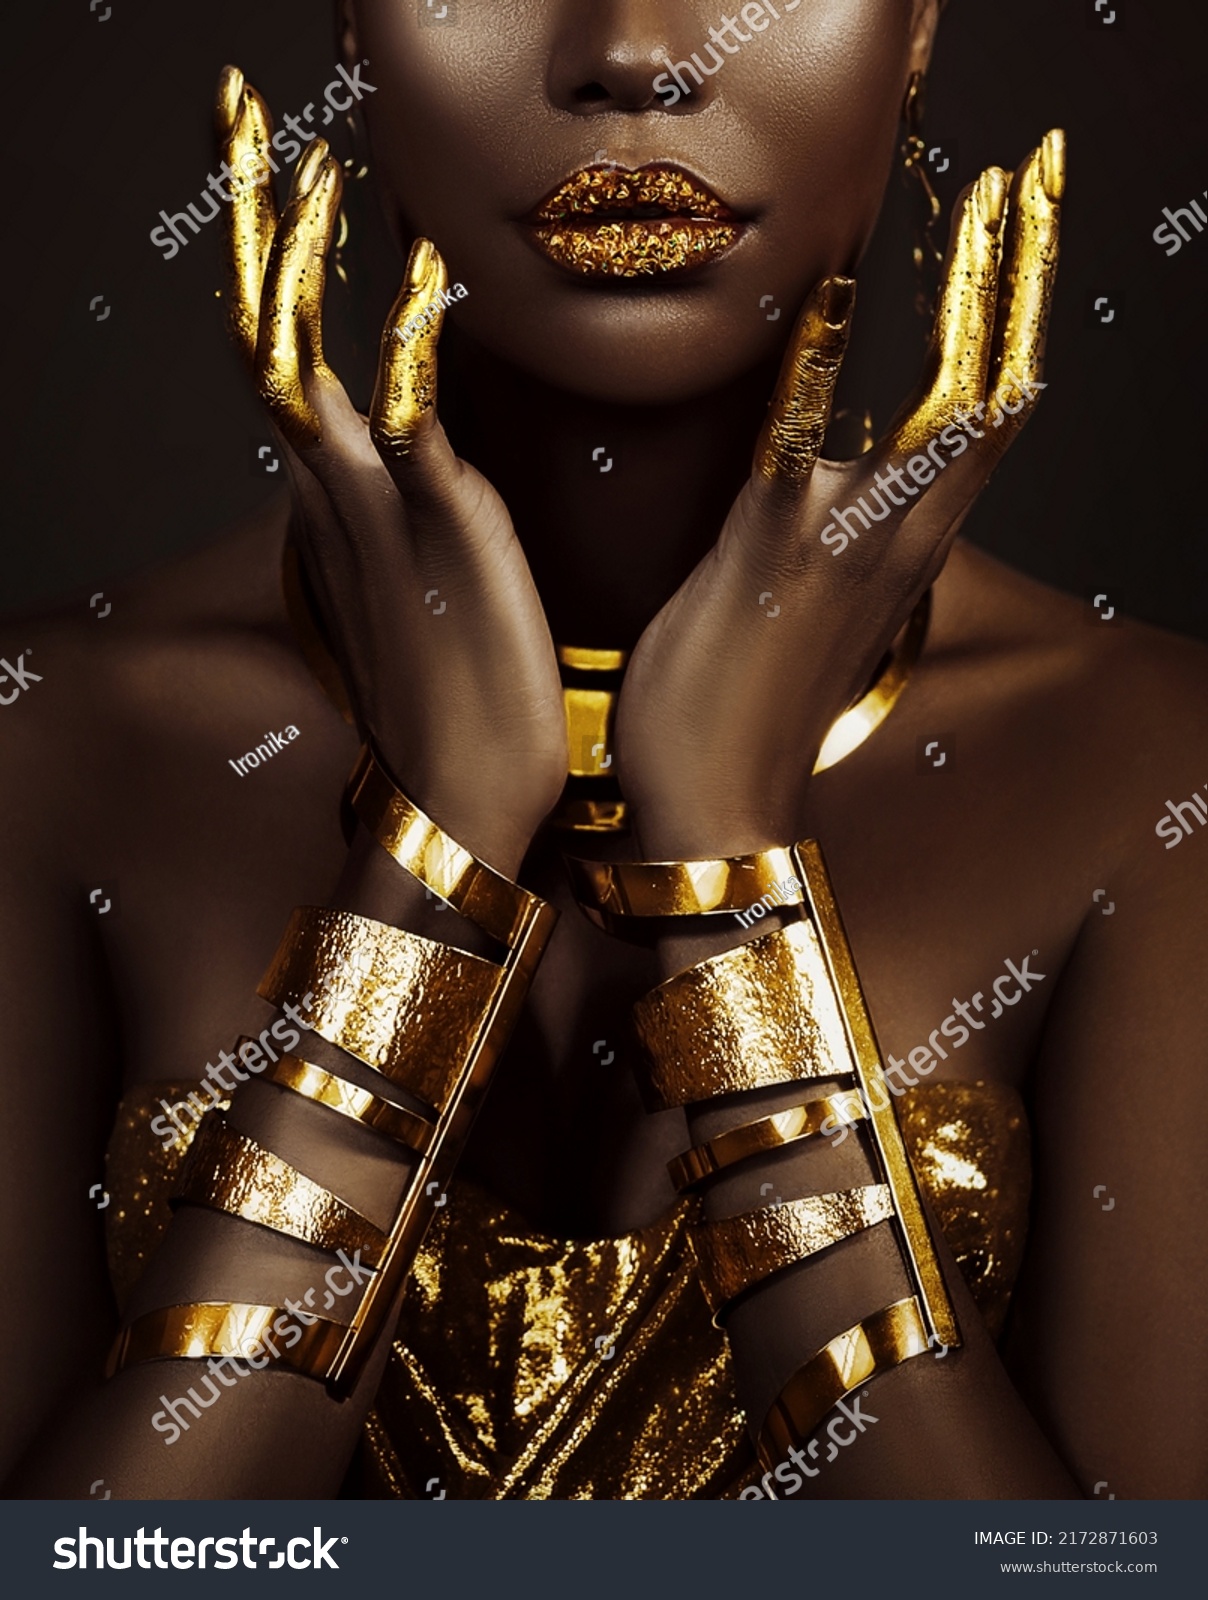 art fantasy portrait african american woman. female hands close-up, fingers in golden paint. Girl queen Cleopatra style. greek gold bracelets. Creative metallic professional makeup lips diamonds gloss #2172871603